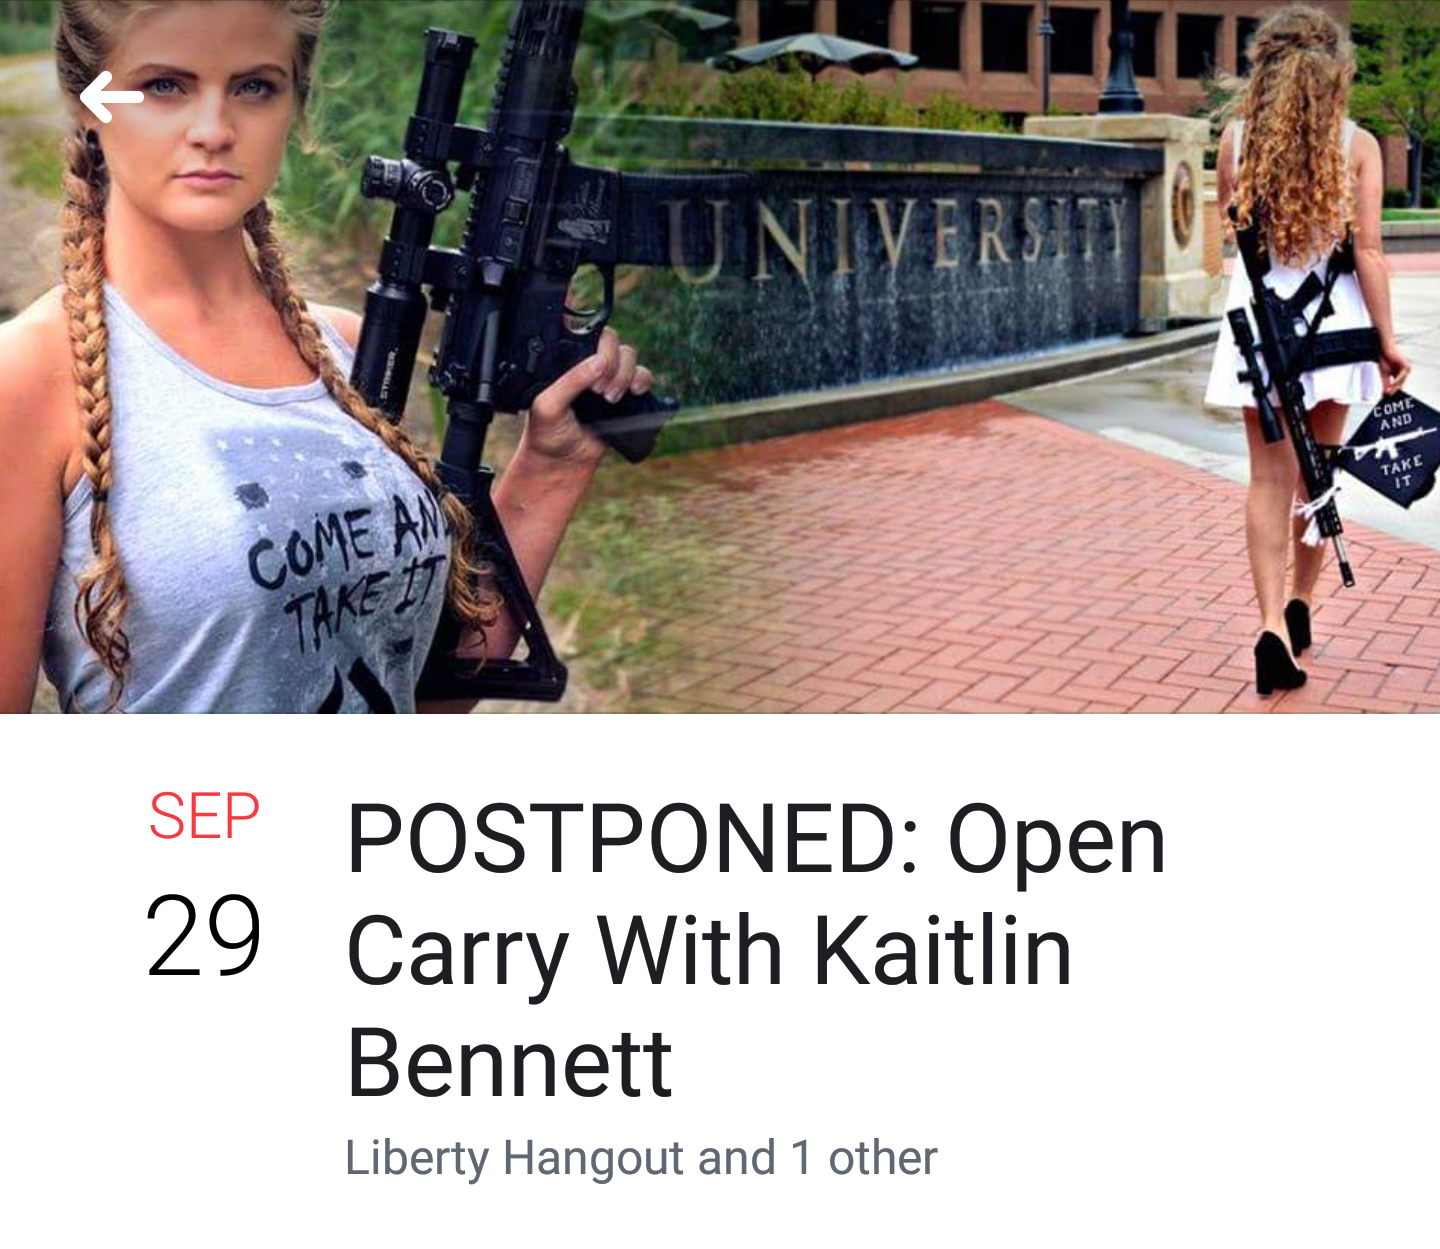 Online statements show "open carry" activist Kaitlin Bennett is g...